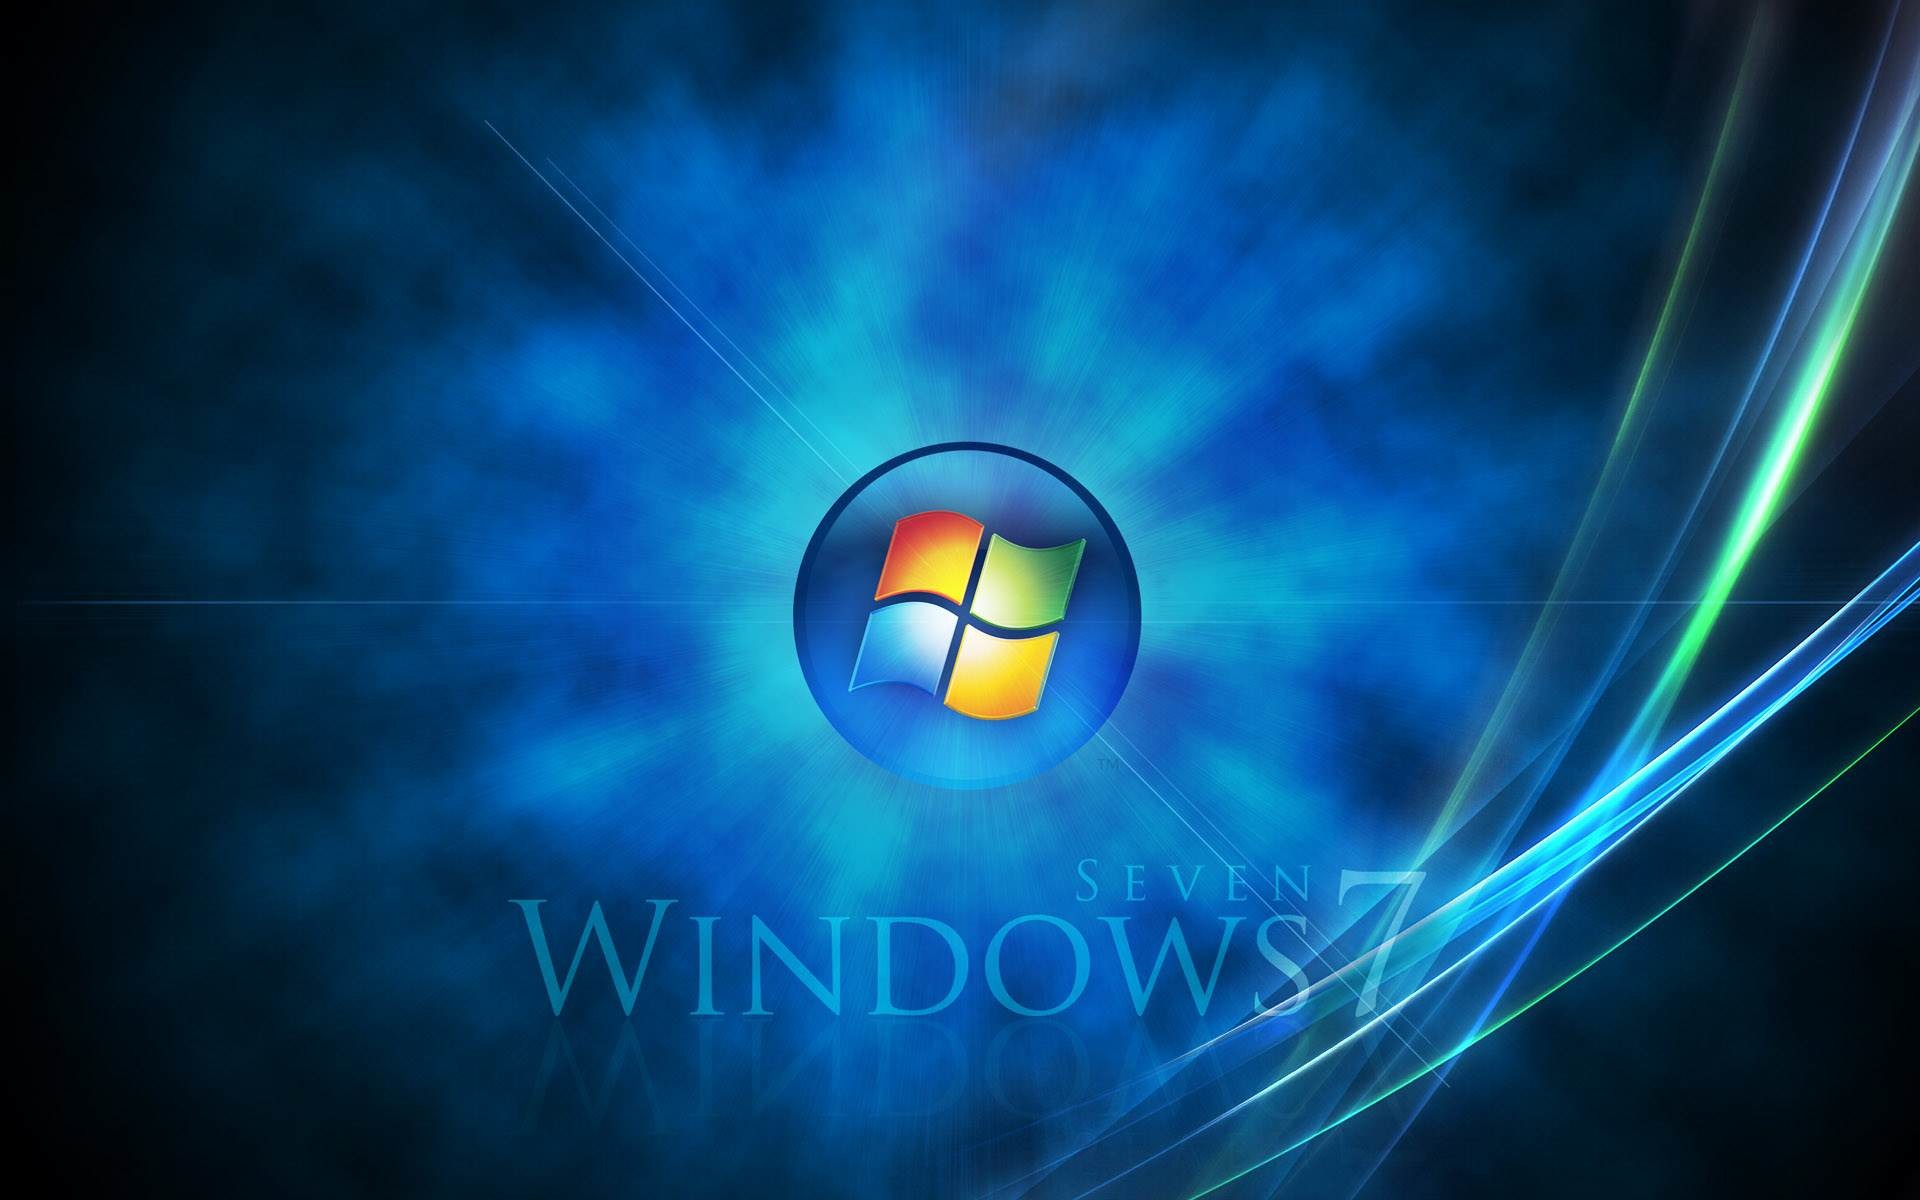 Windows Wallpaper by antony on DeviantArt Windows 7 Professional Wallpapers HD Wallpapers